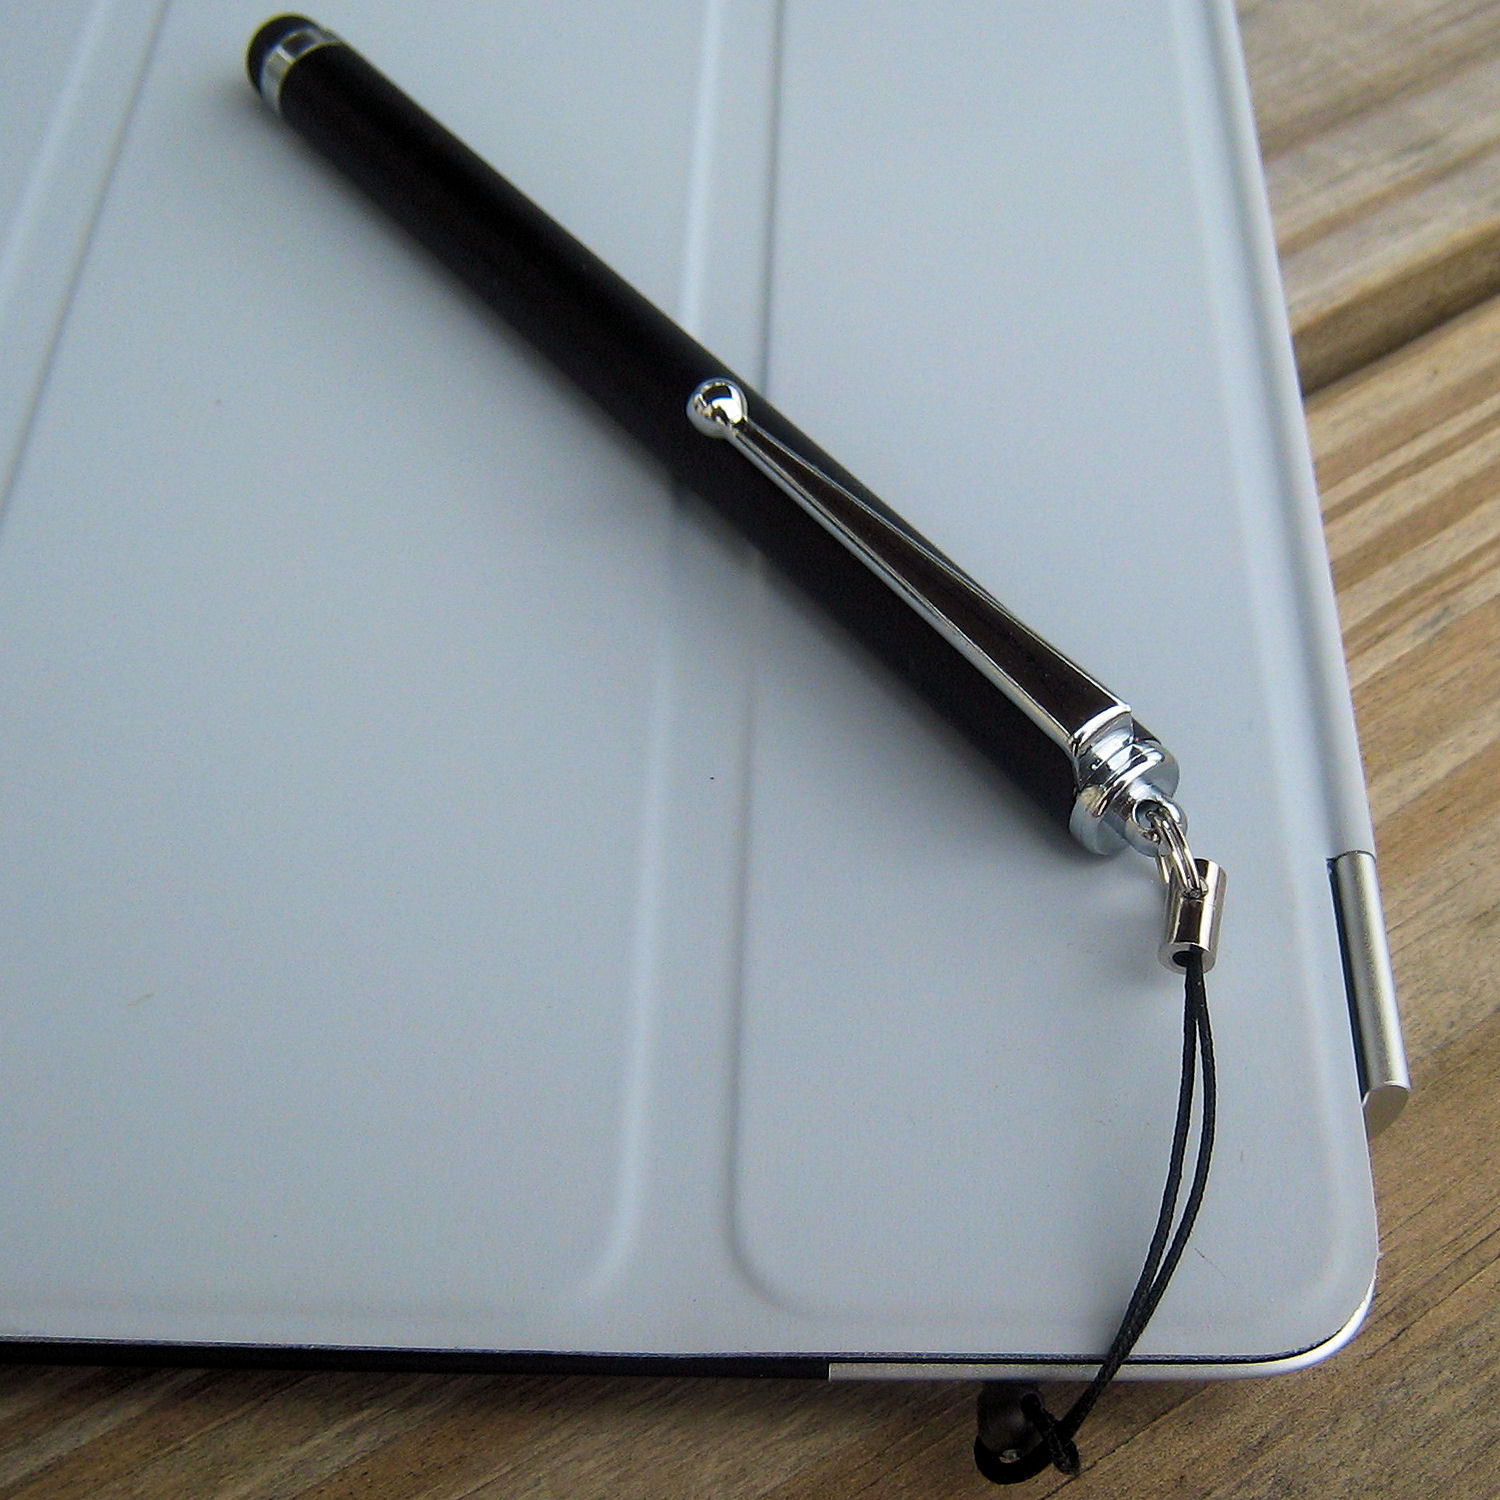 Gomadic Precision Tip Capacitive Stylus Pen designed for the Motorola Flipside (Black Color) - Lifetime Warranty